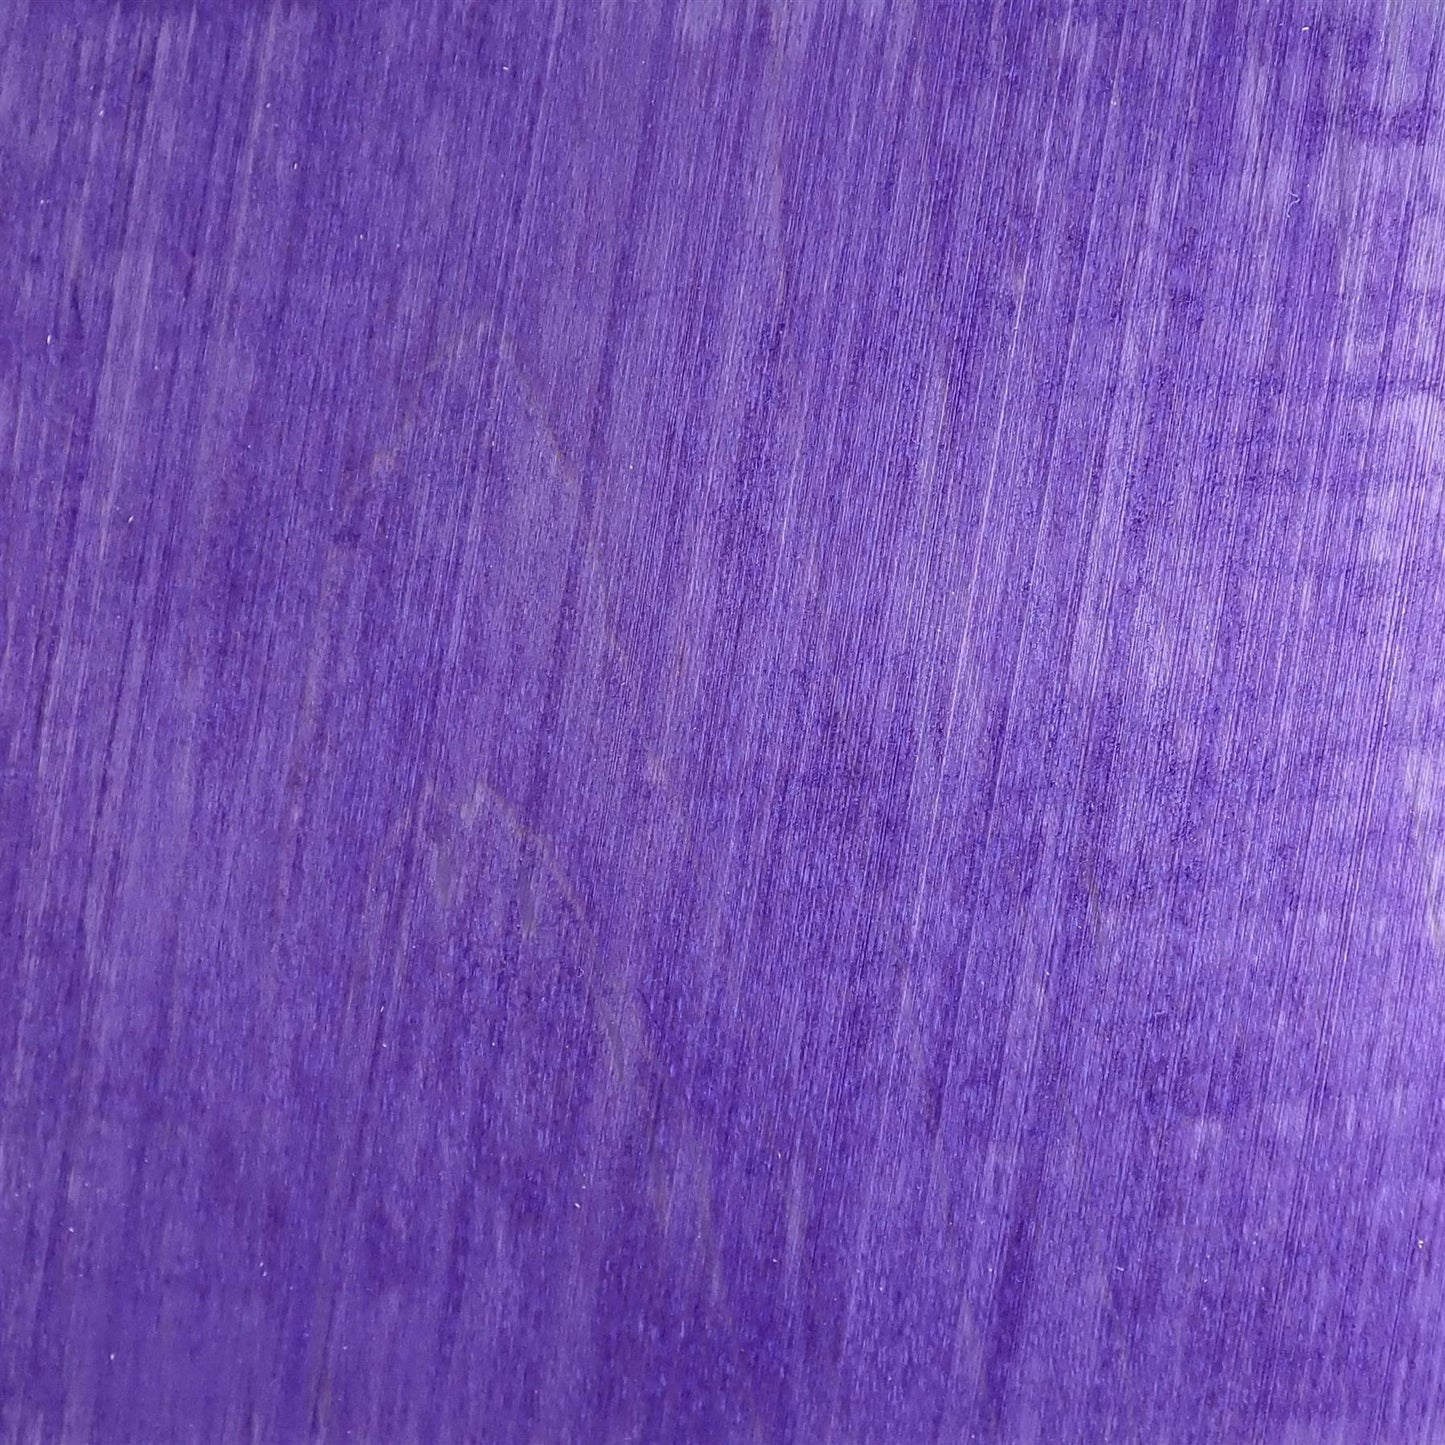 dartfords Purple Alcohol Soluble Aniline Wood Dye Powder - 28g 1Oz